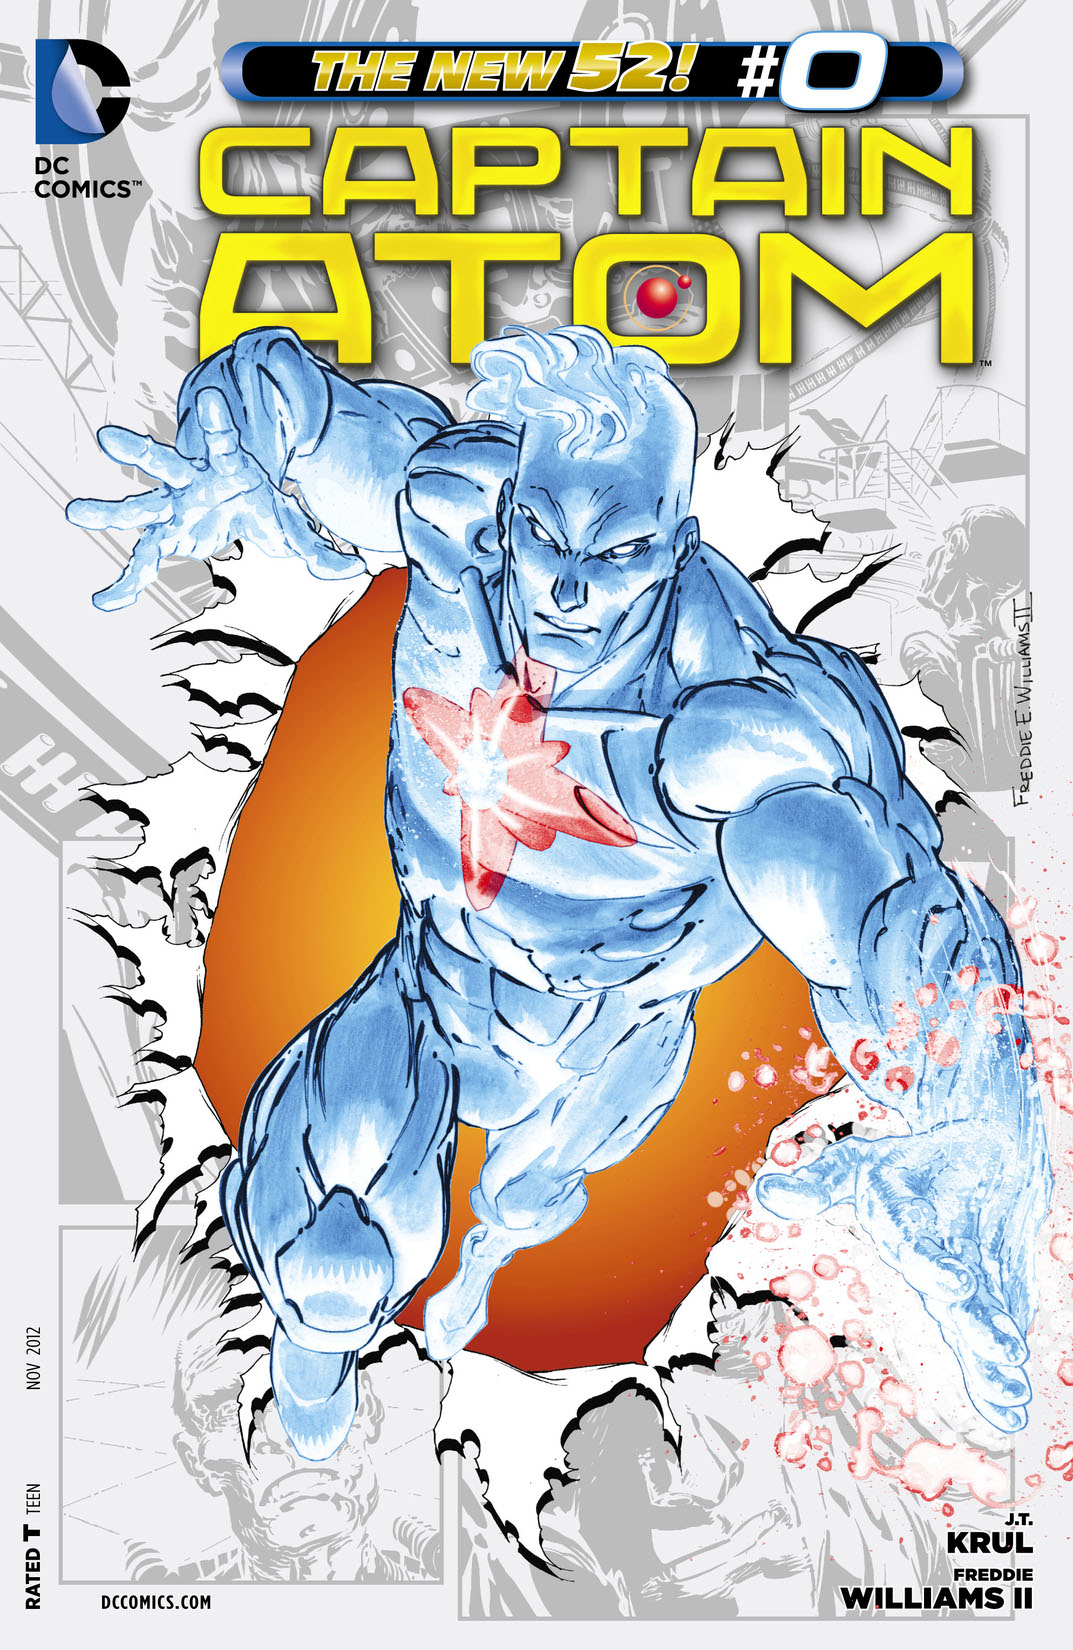 Captain Atom (2011-) #0 preview images